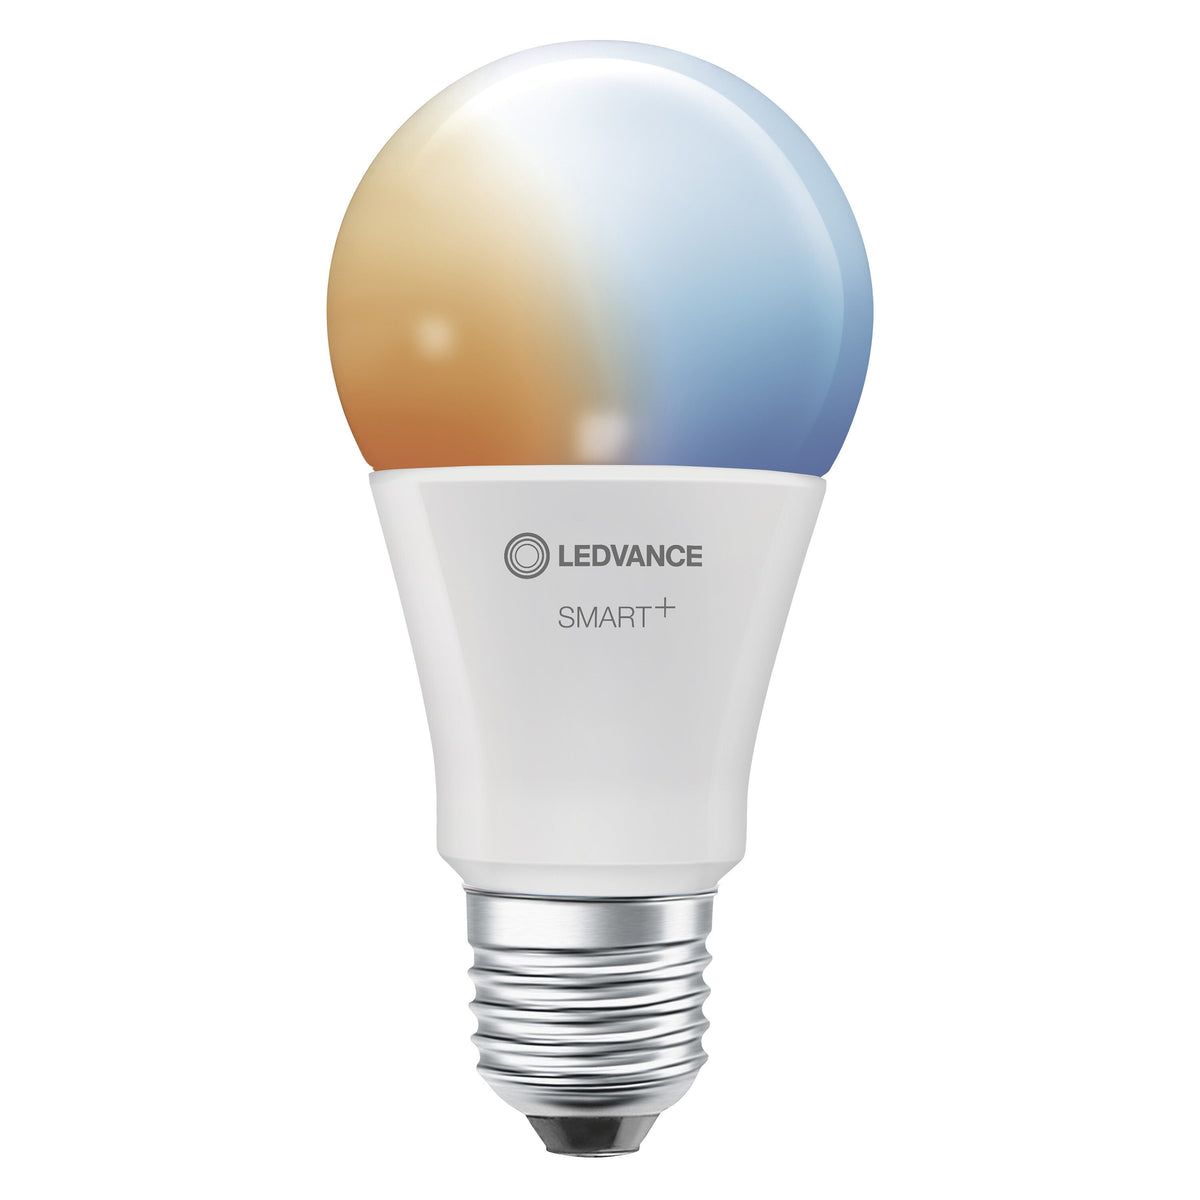 Lampada LED LEDVANCE SMART+ WIFI, effetto gelo, 14W, 1521lm